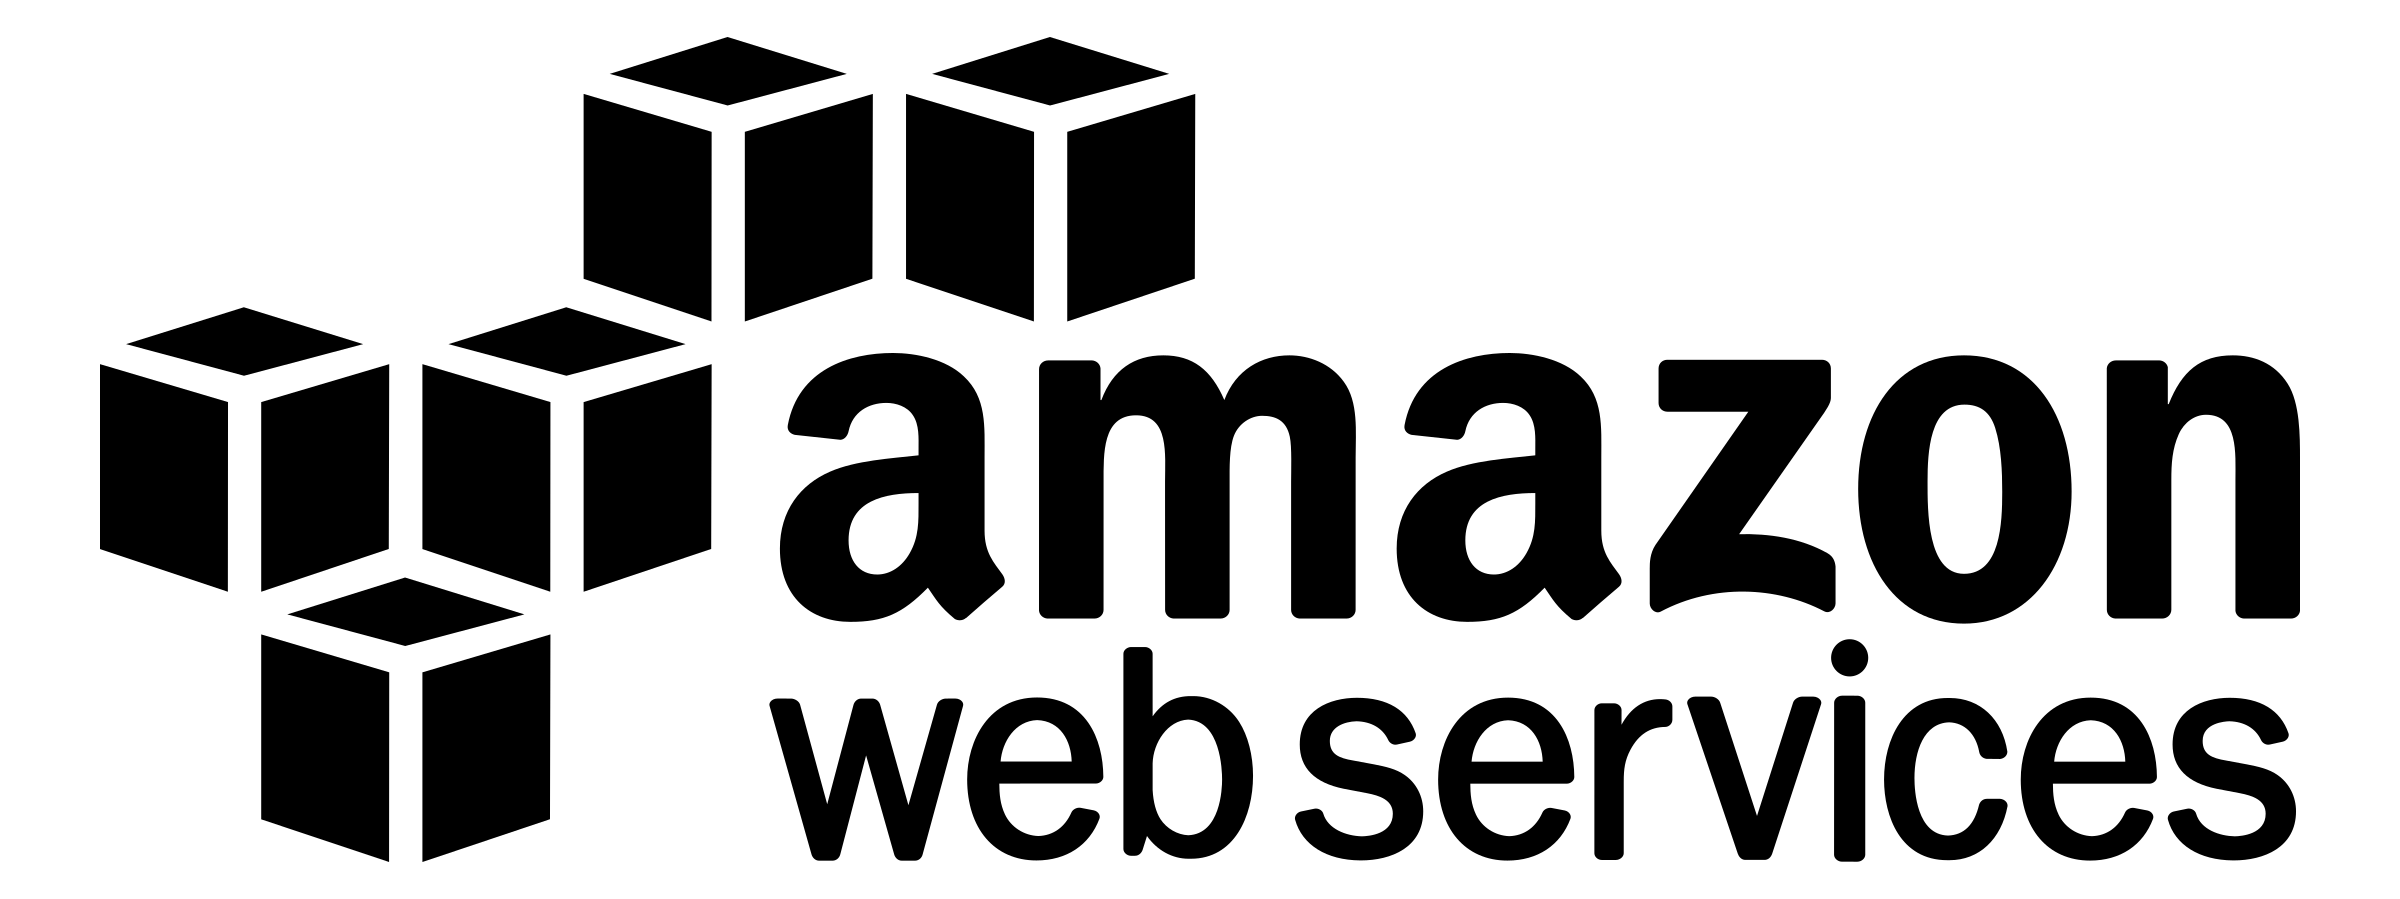 Amazon Web Services Logo - Amazon Web Services Logo PNG Transparent & SVG Vector - Freebie Supply